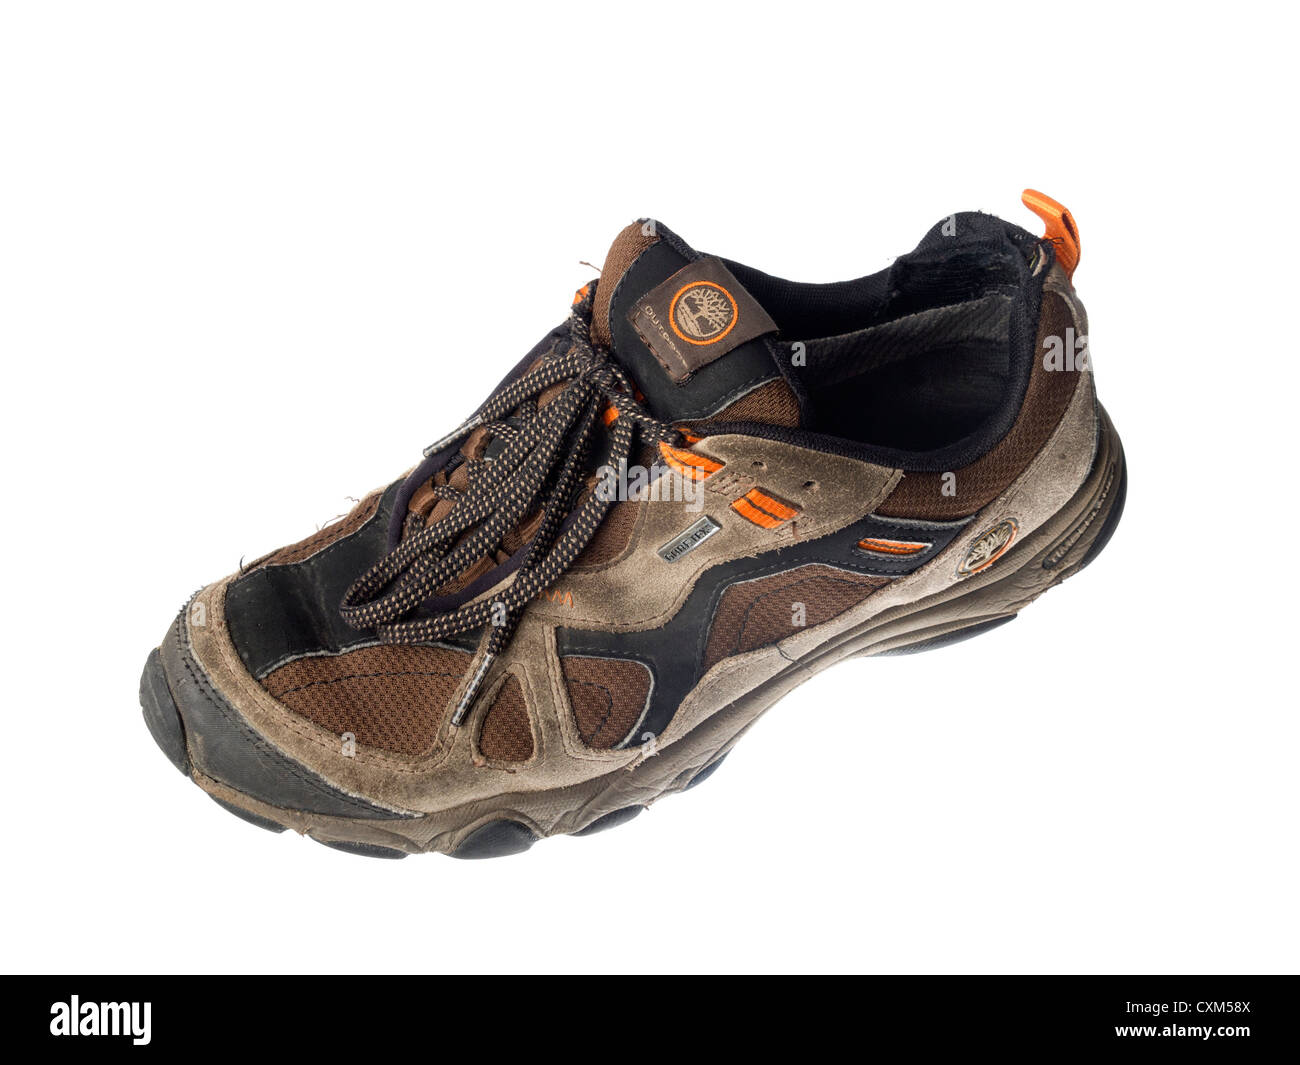 Timberland brown boots fotografías e imágenes de alta resolución - Alamy